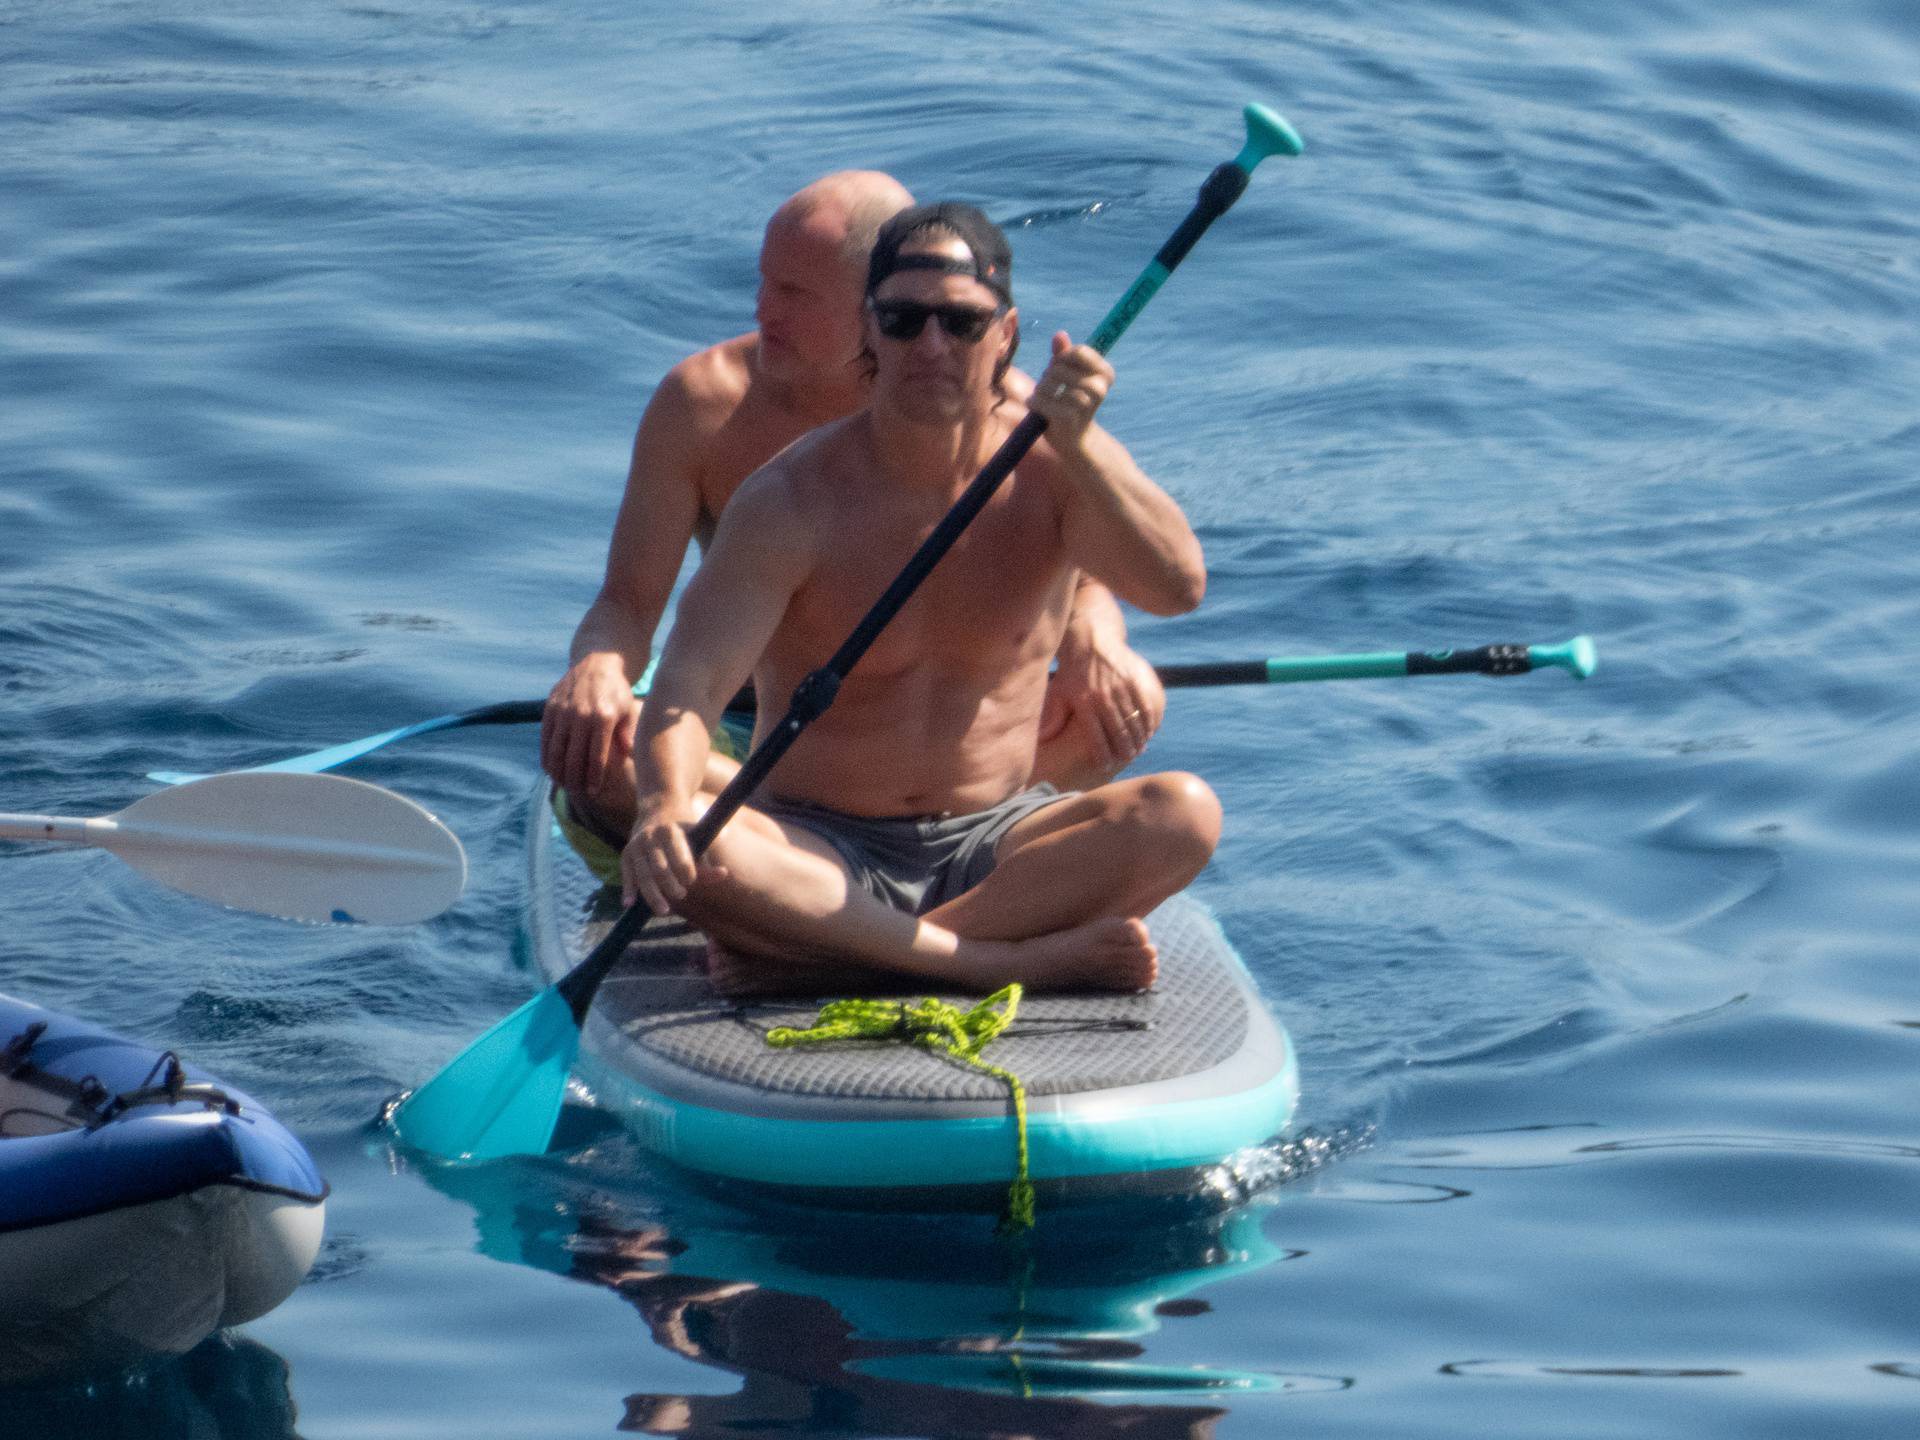 Glumci Woody Harrelson i Matthew McConaughey veslaju u moru pred Dubrovnikom